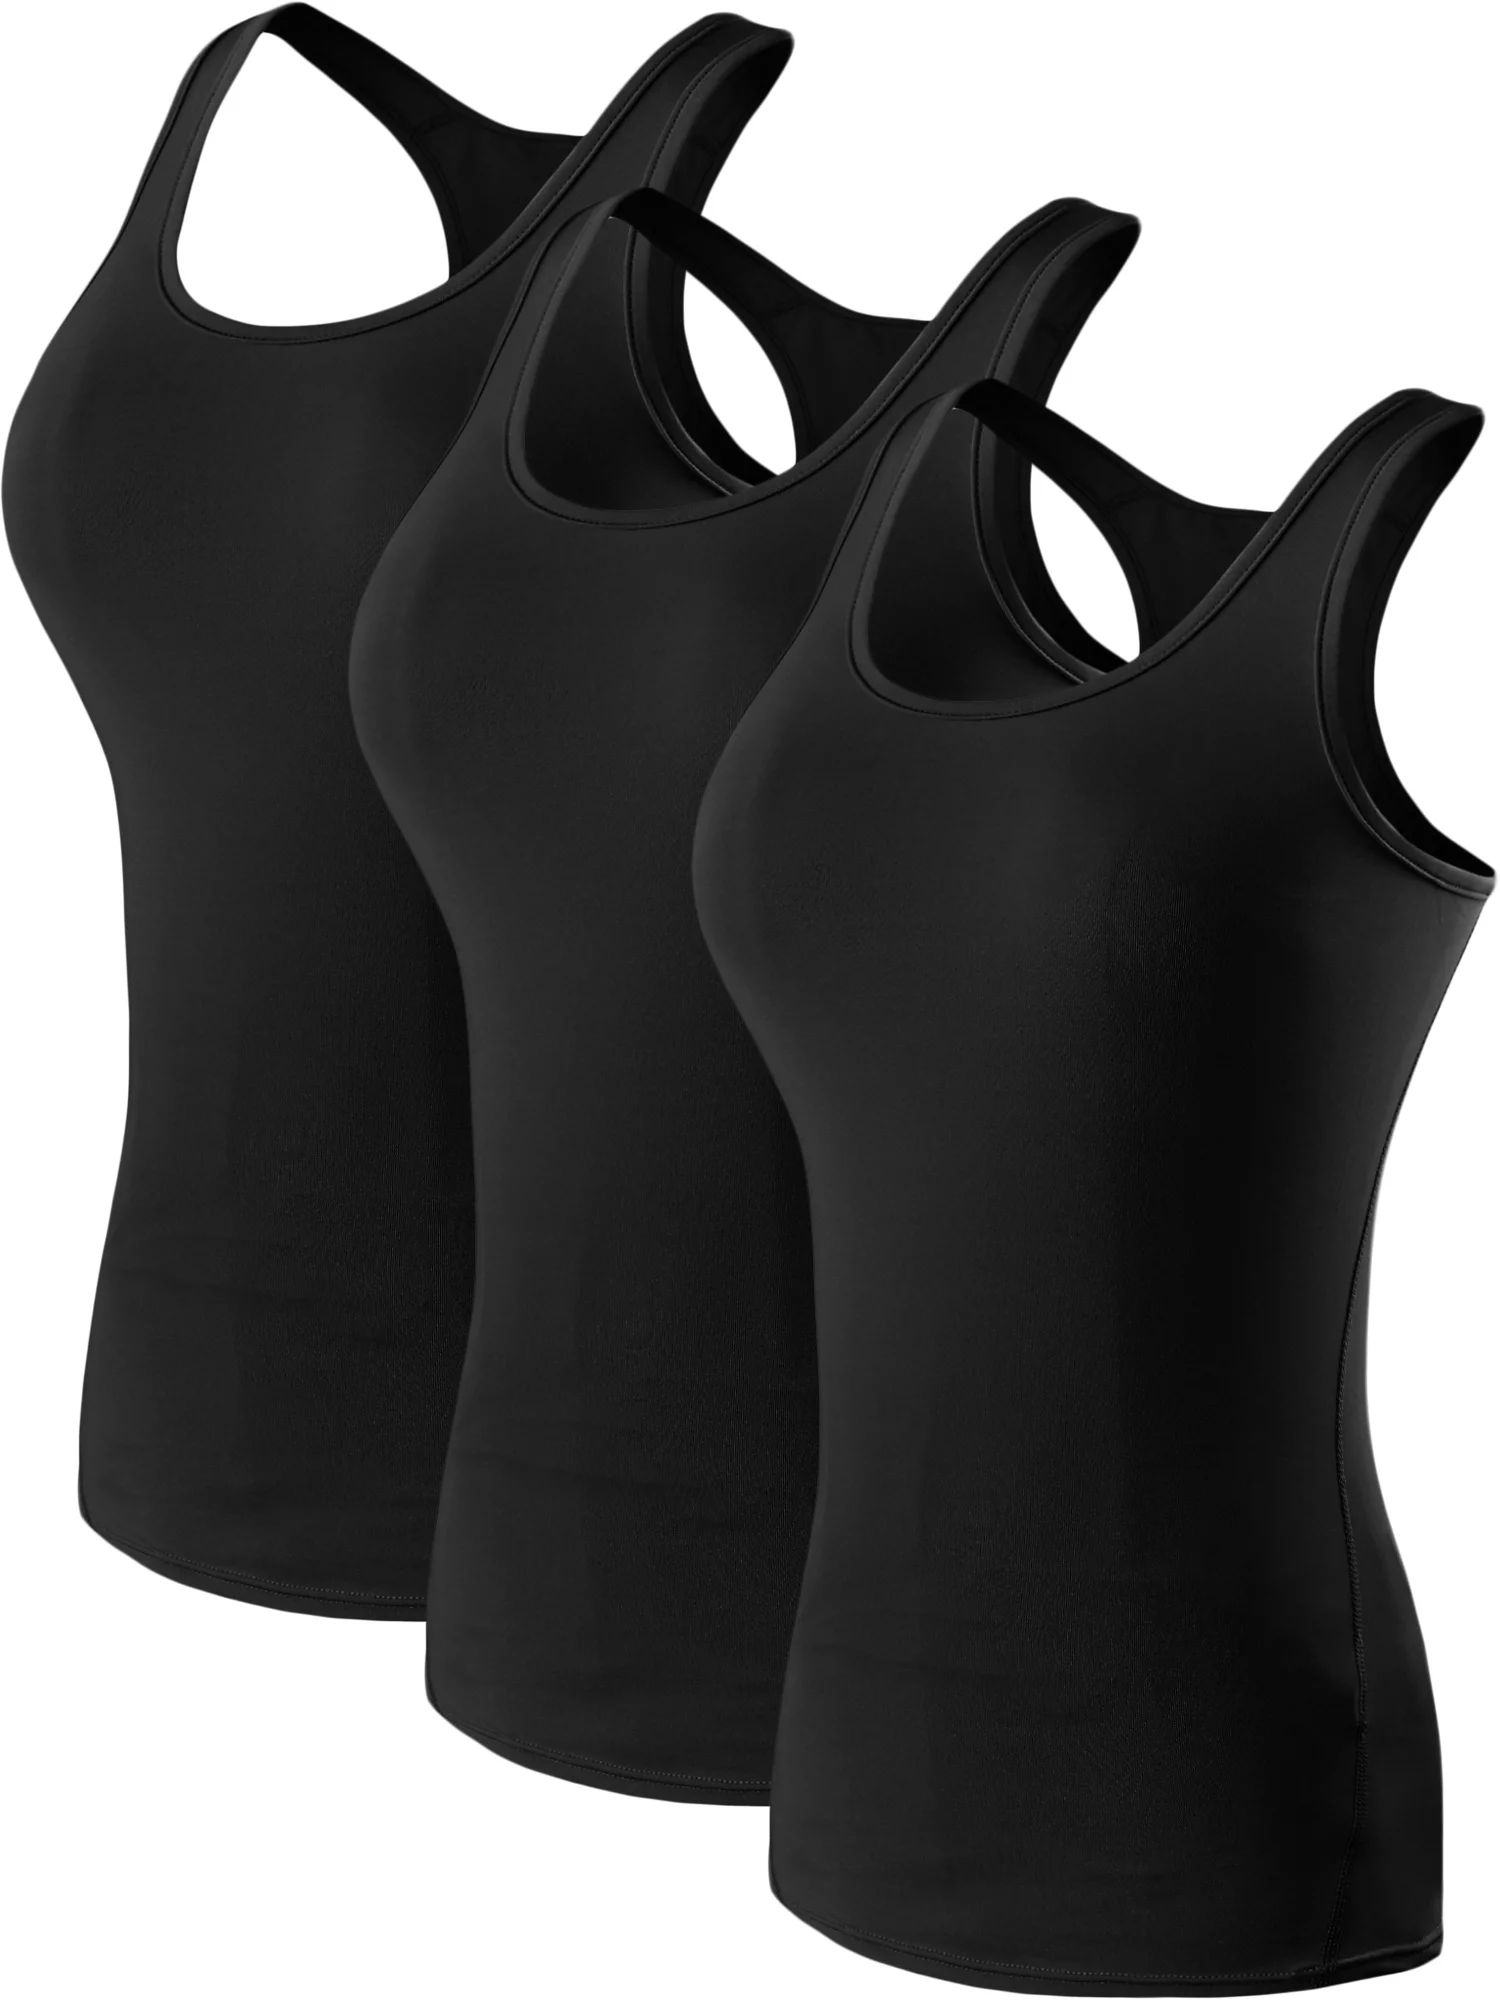 NELEUS Womens Compression Base Layer Dry Fit Tank Top 3 Pack,Black,US Size XS | Walmart (US)